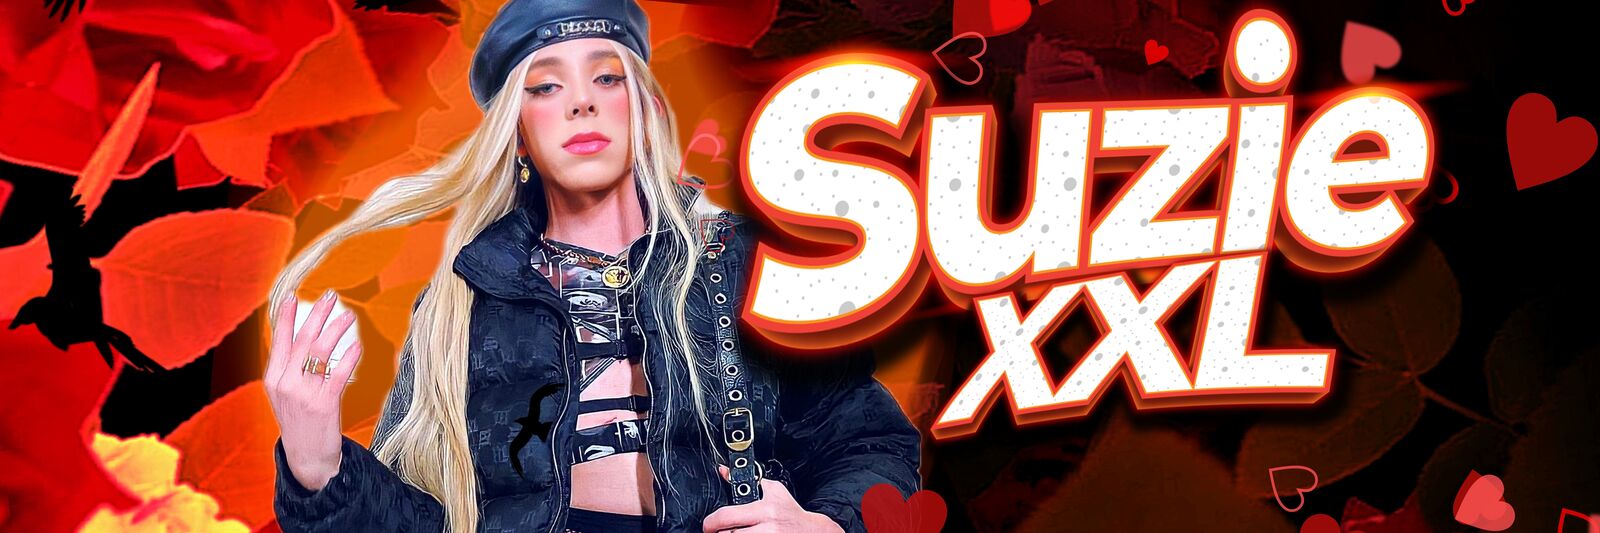 See Suzie XXXL profile